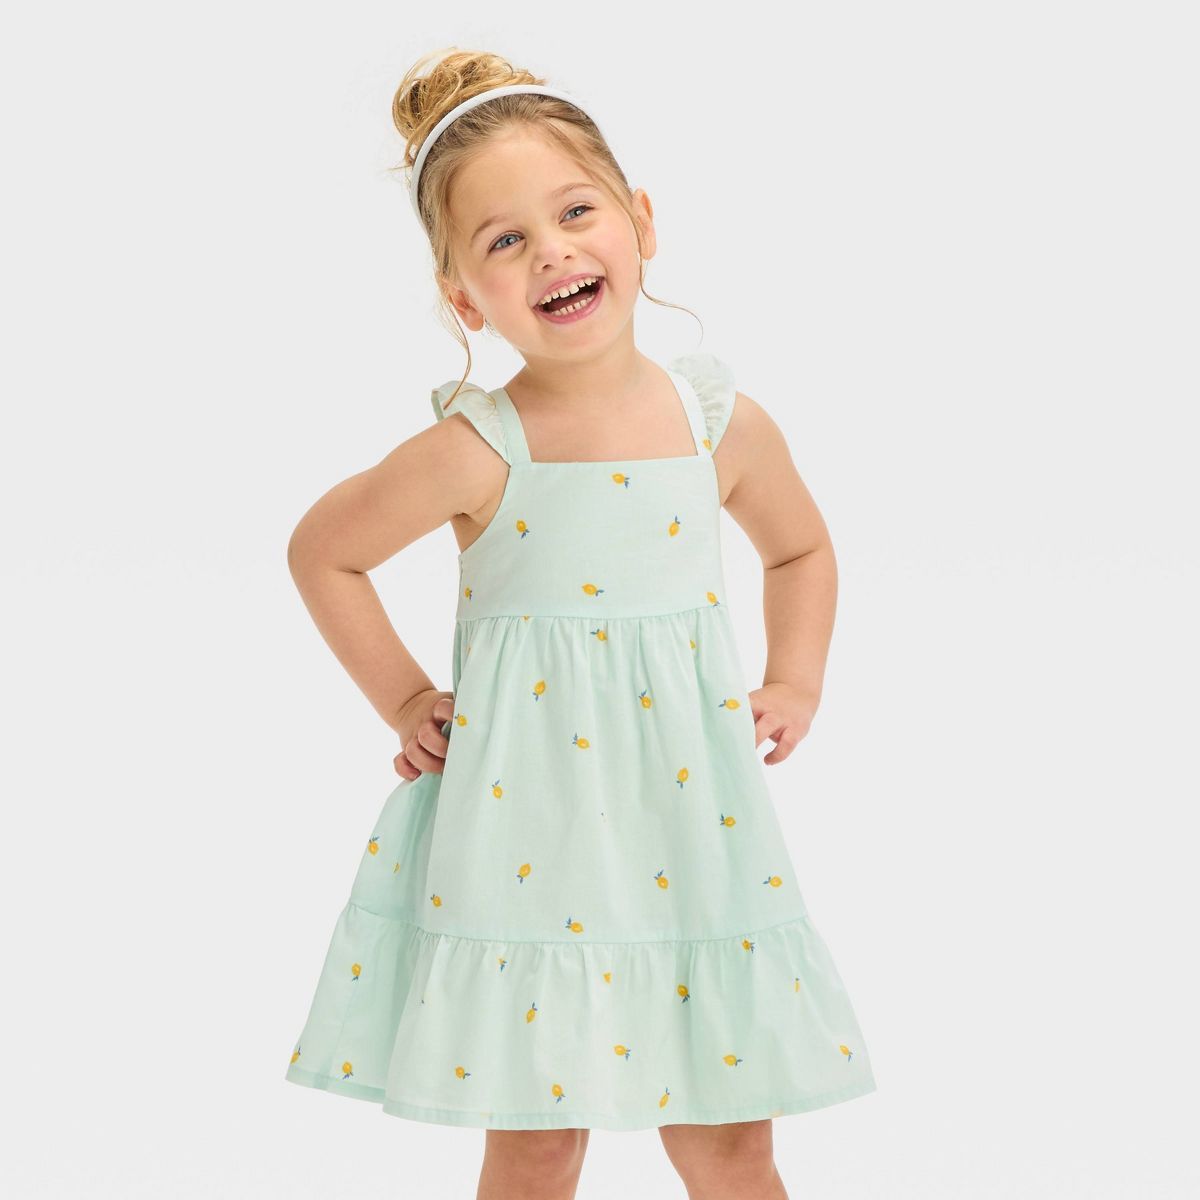 OshKosh B'gosh Toddler Girls' Lemon Dress - Green | Target